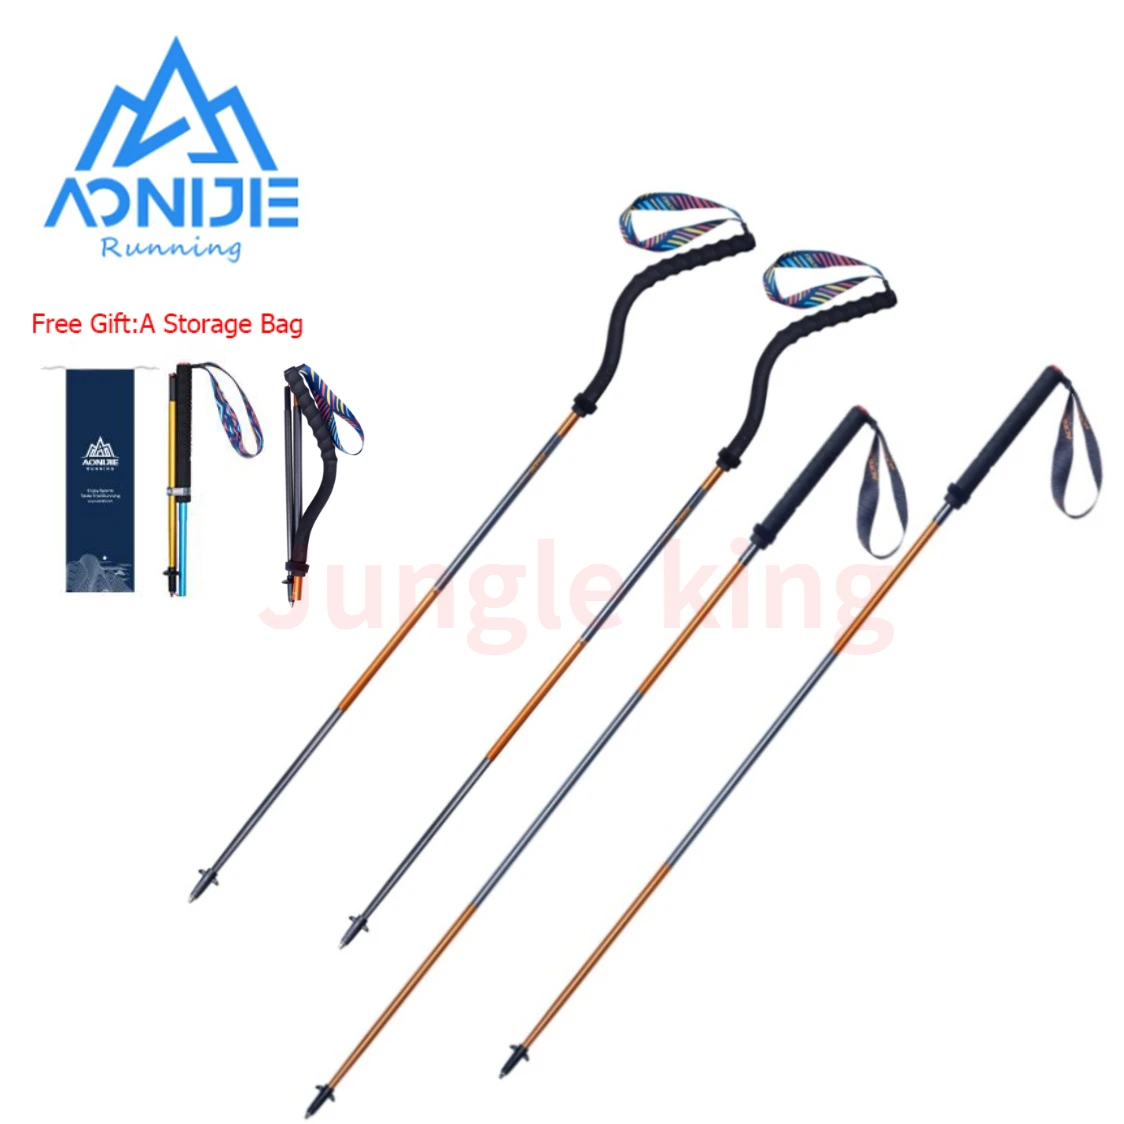 

AONIJIE New E4201 E4206 M-Pole Folding Ultralight Quick Lock Trekking Poles Hiking Pole Race Running Walking Stick Carbon Fiber